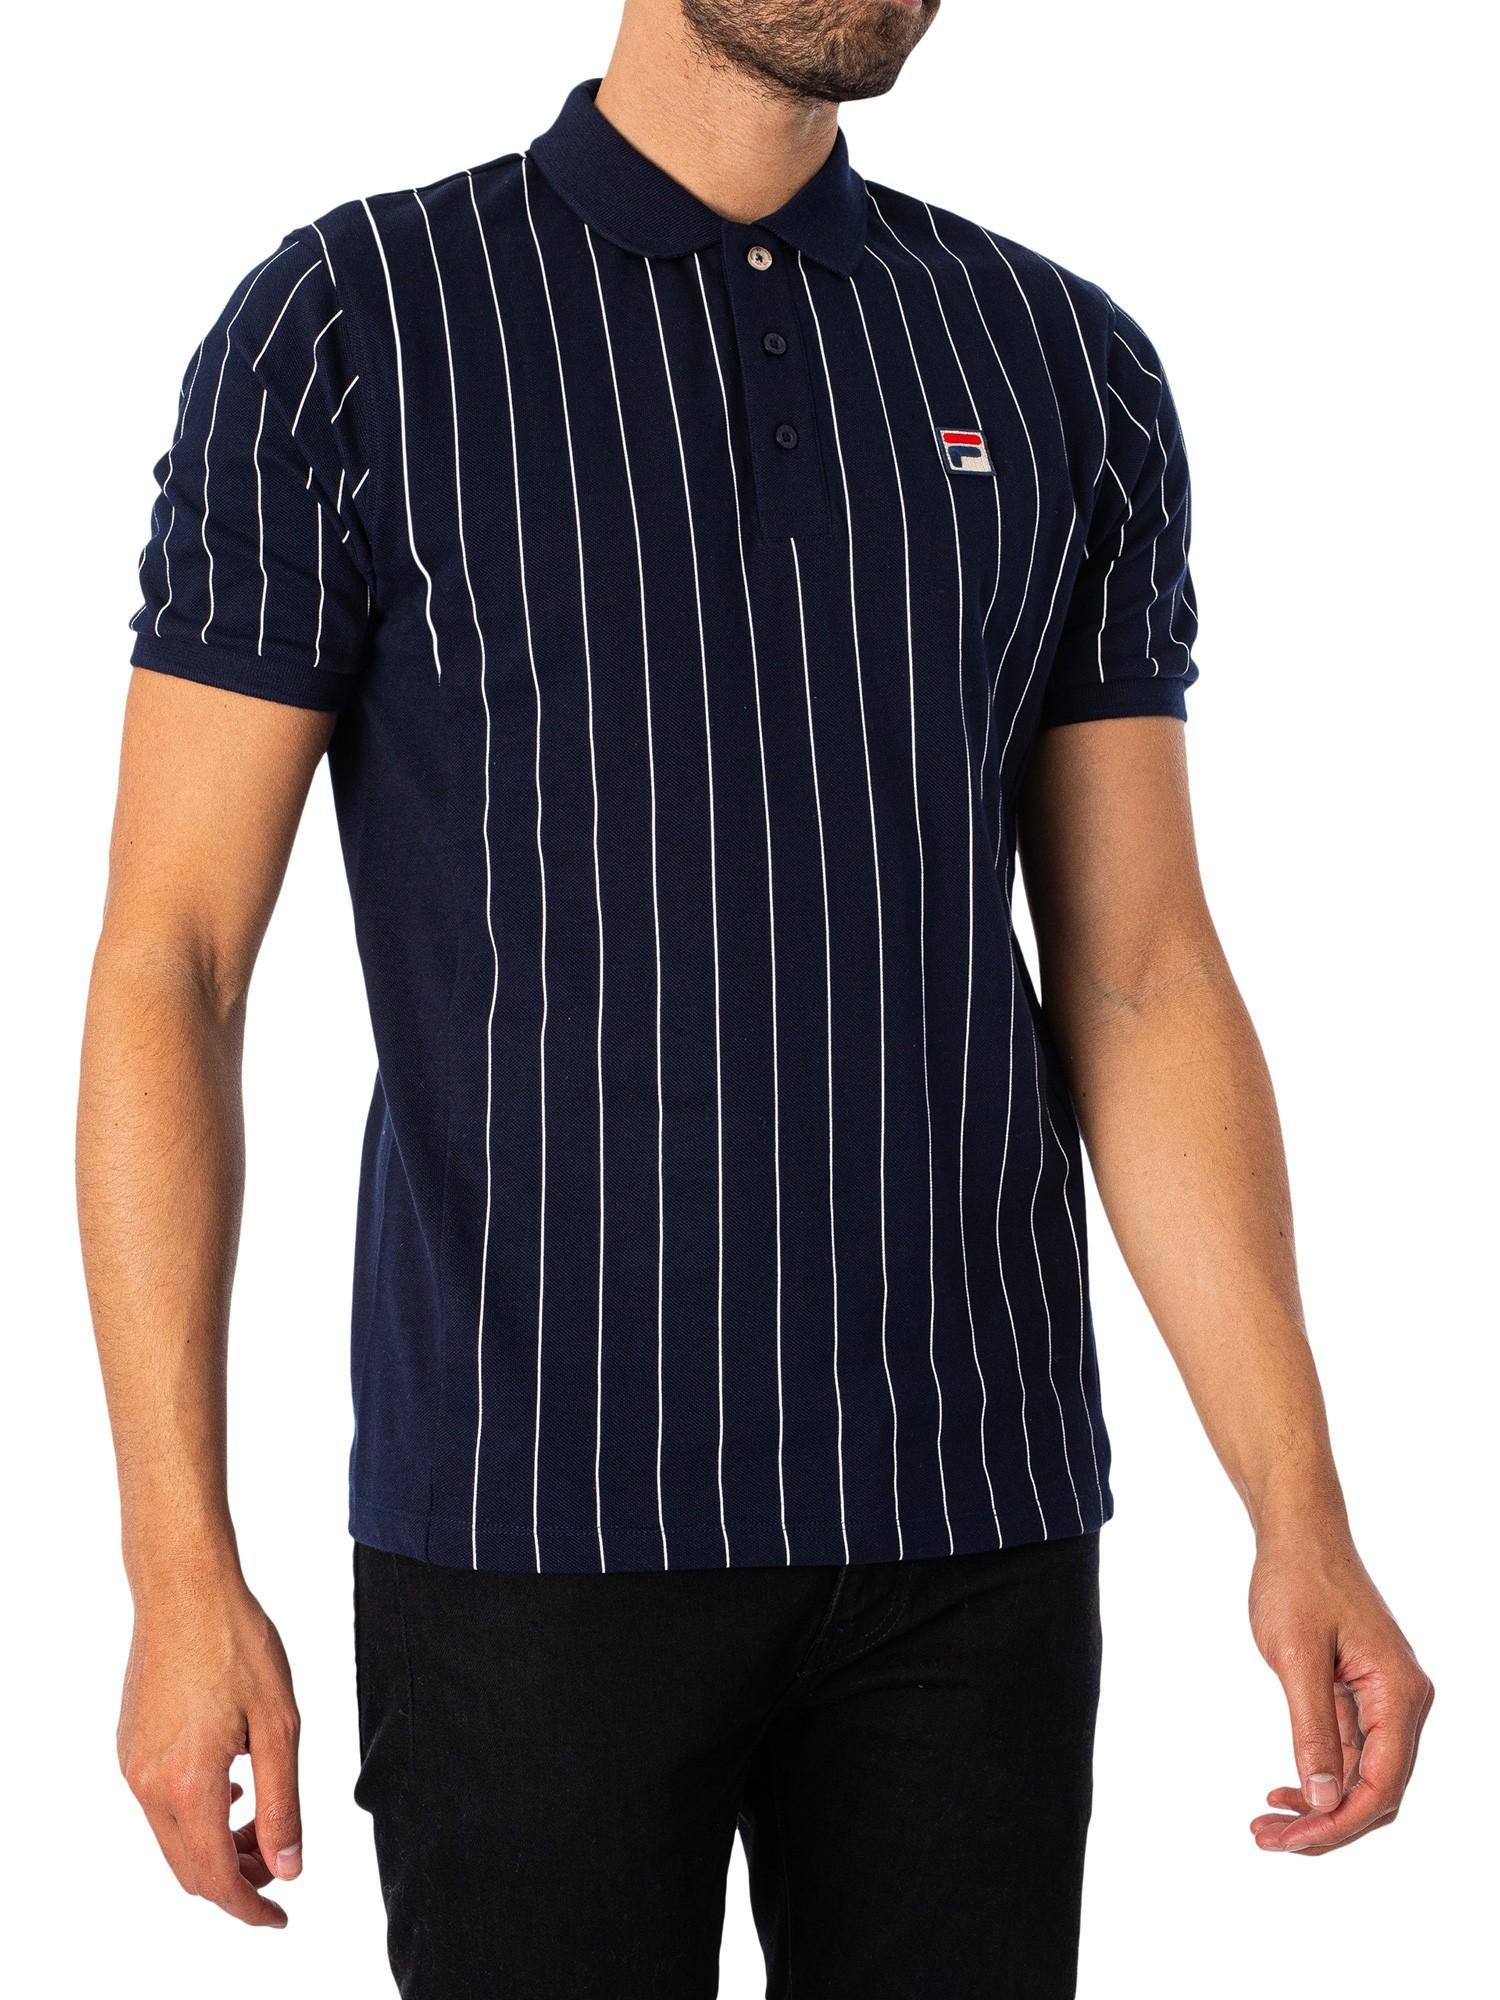 Fila Evo Yarn Dye Pin Stripe Polo Shirt in Blue for Men | Lyst